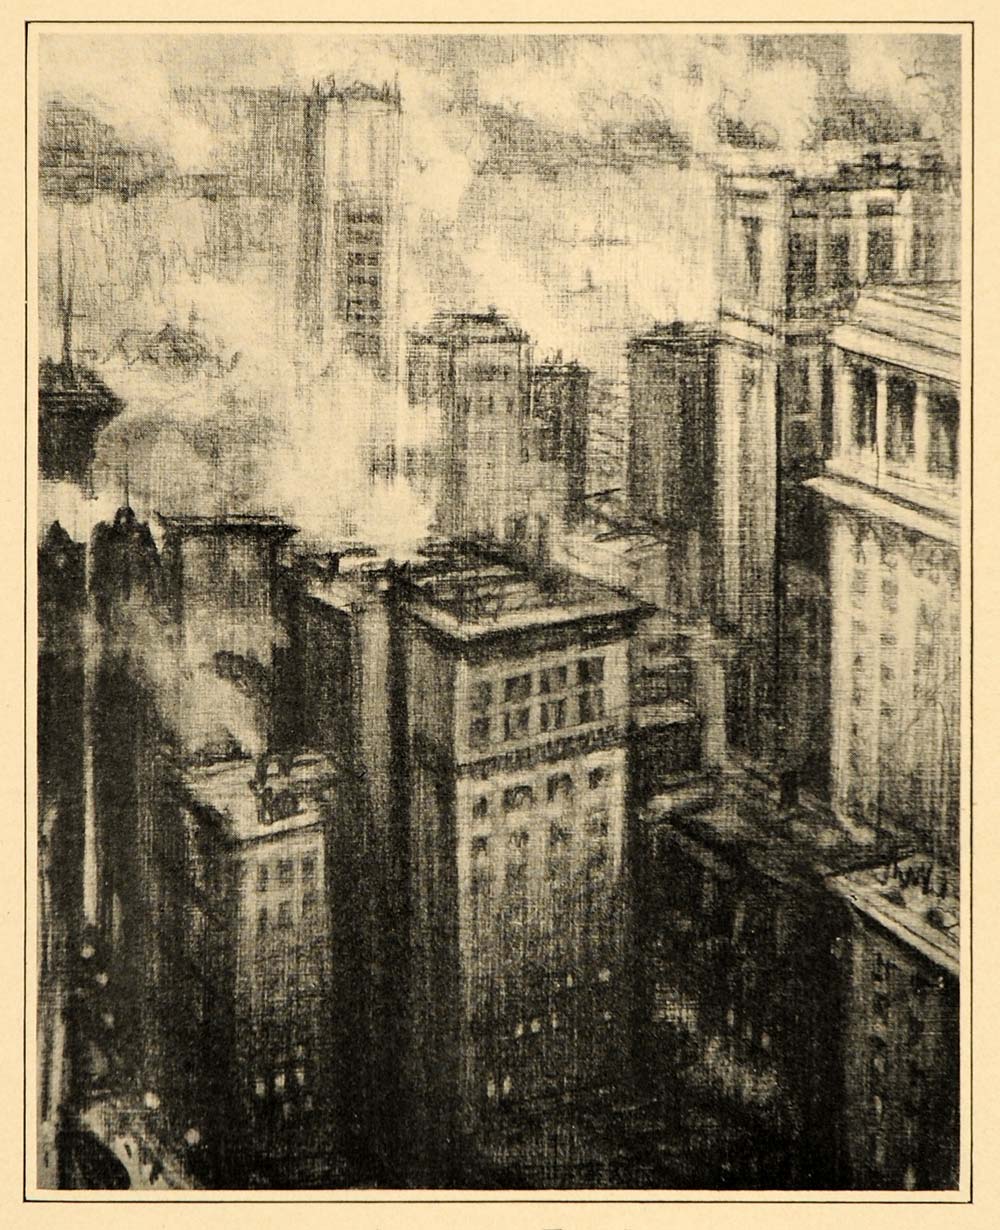 1909 Joseph Pennell New York City Skyscrapers NYC Print ORIGINAL HISTORIC NY5